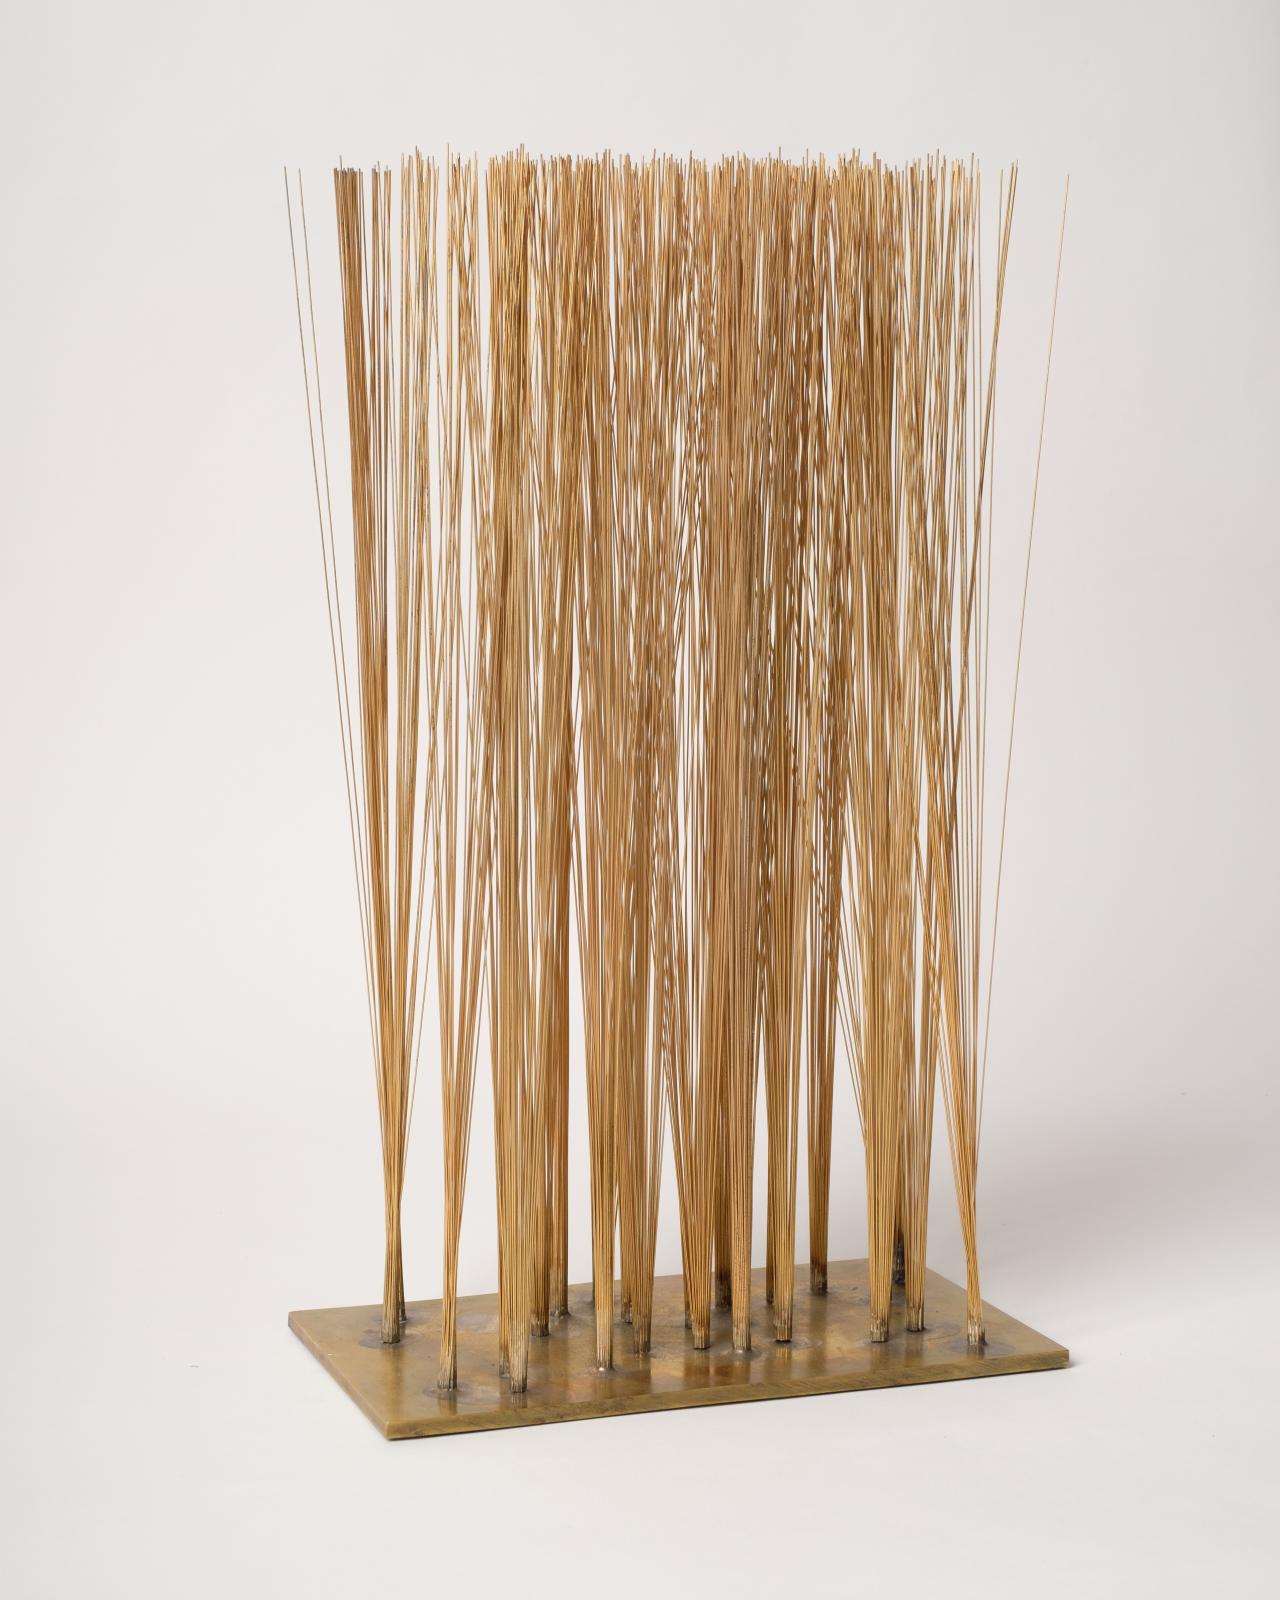 Harry Bertoia, Untitled (Wheat), c. 1961-65